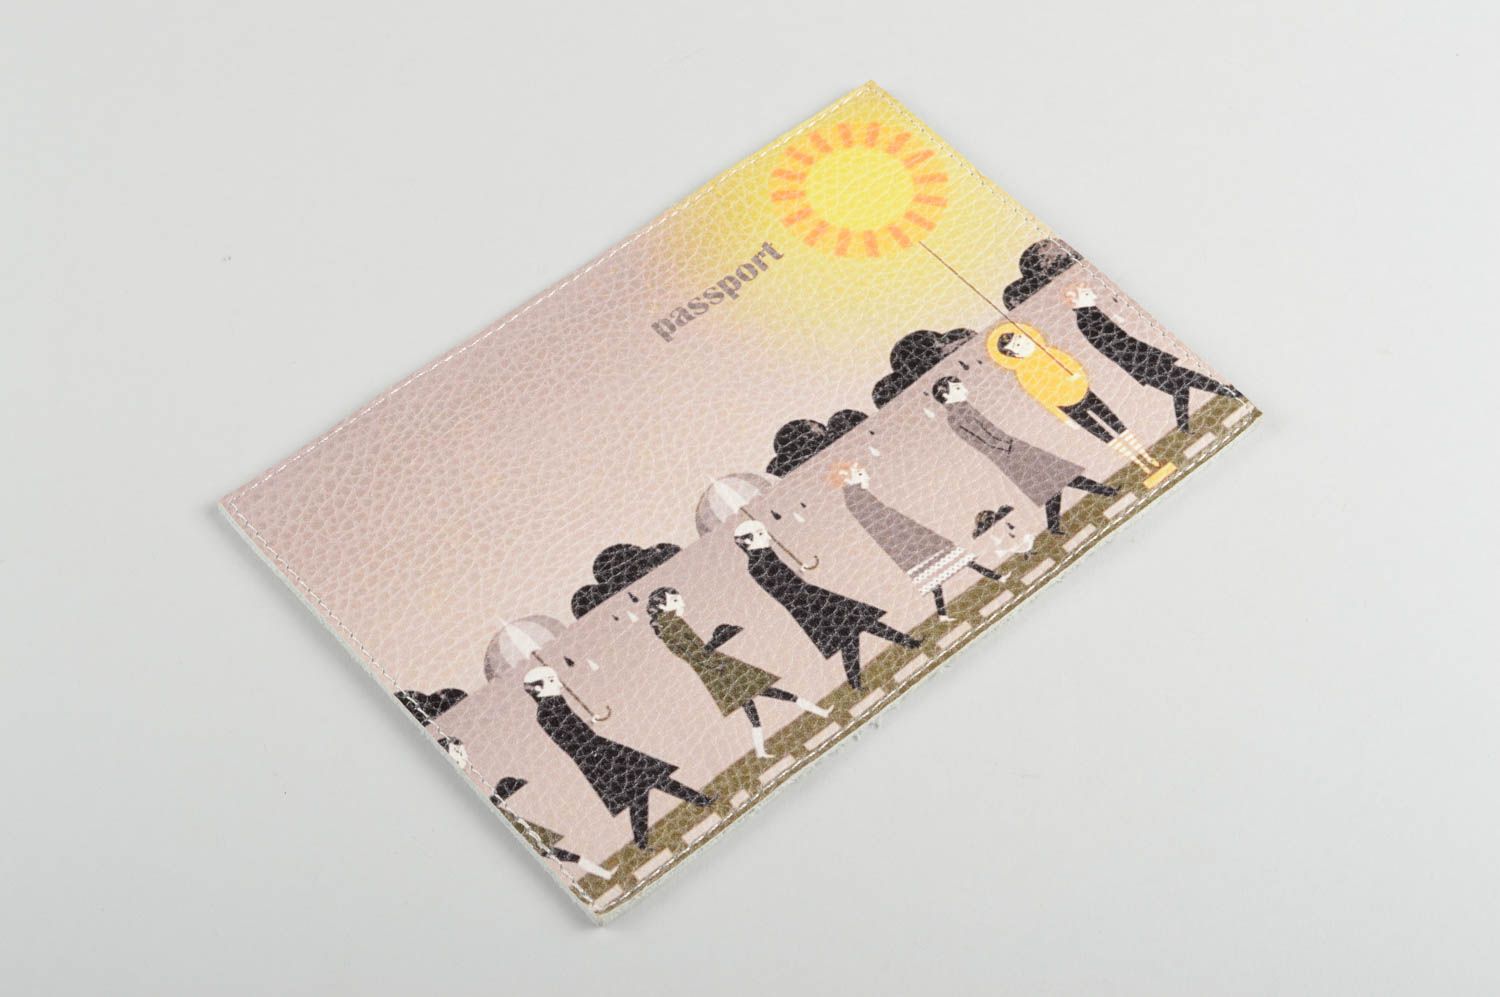 Handmade cover for passport leather passport cover handmade gift ideas photo 2